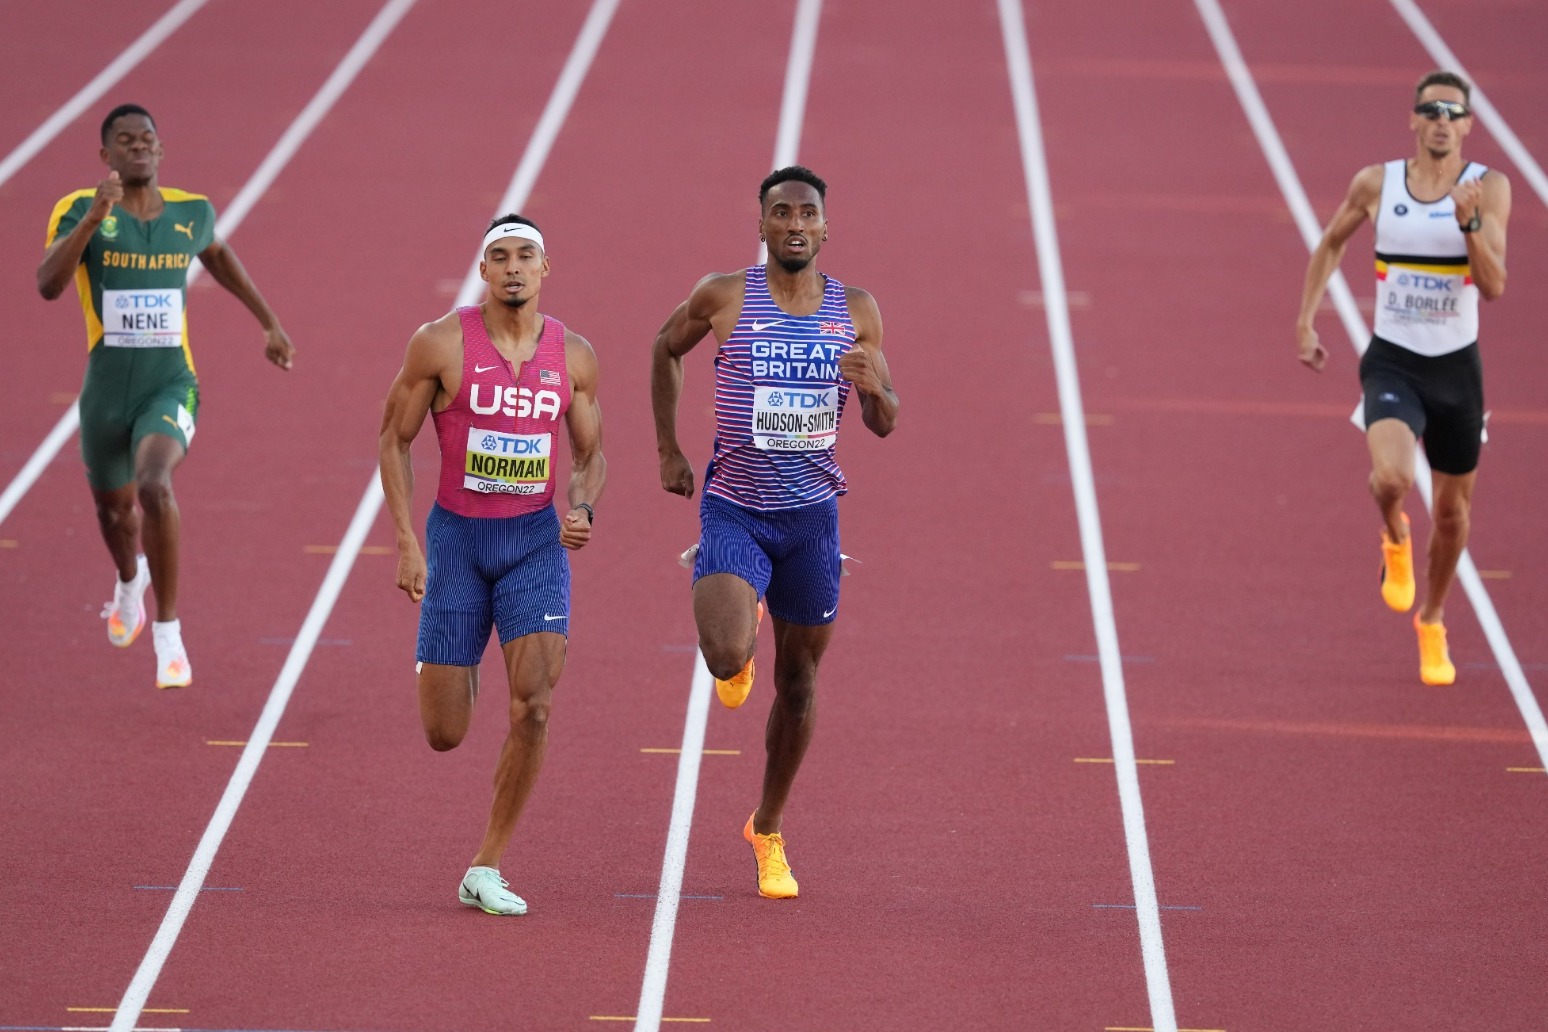 Matt Hudson-Smith eases into 400m final at World Championships 